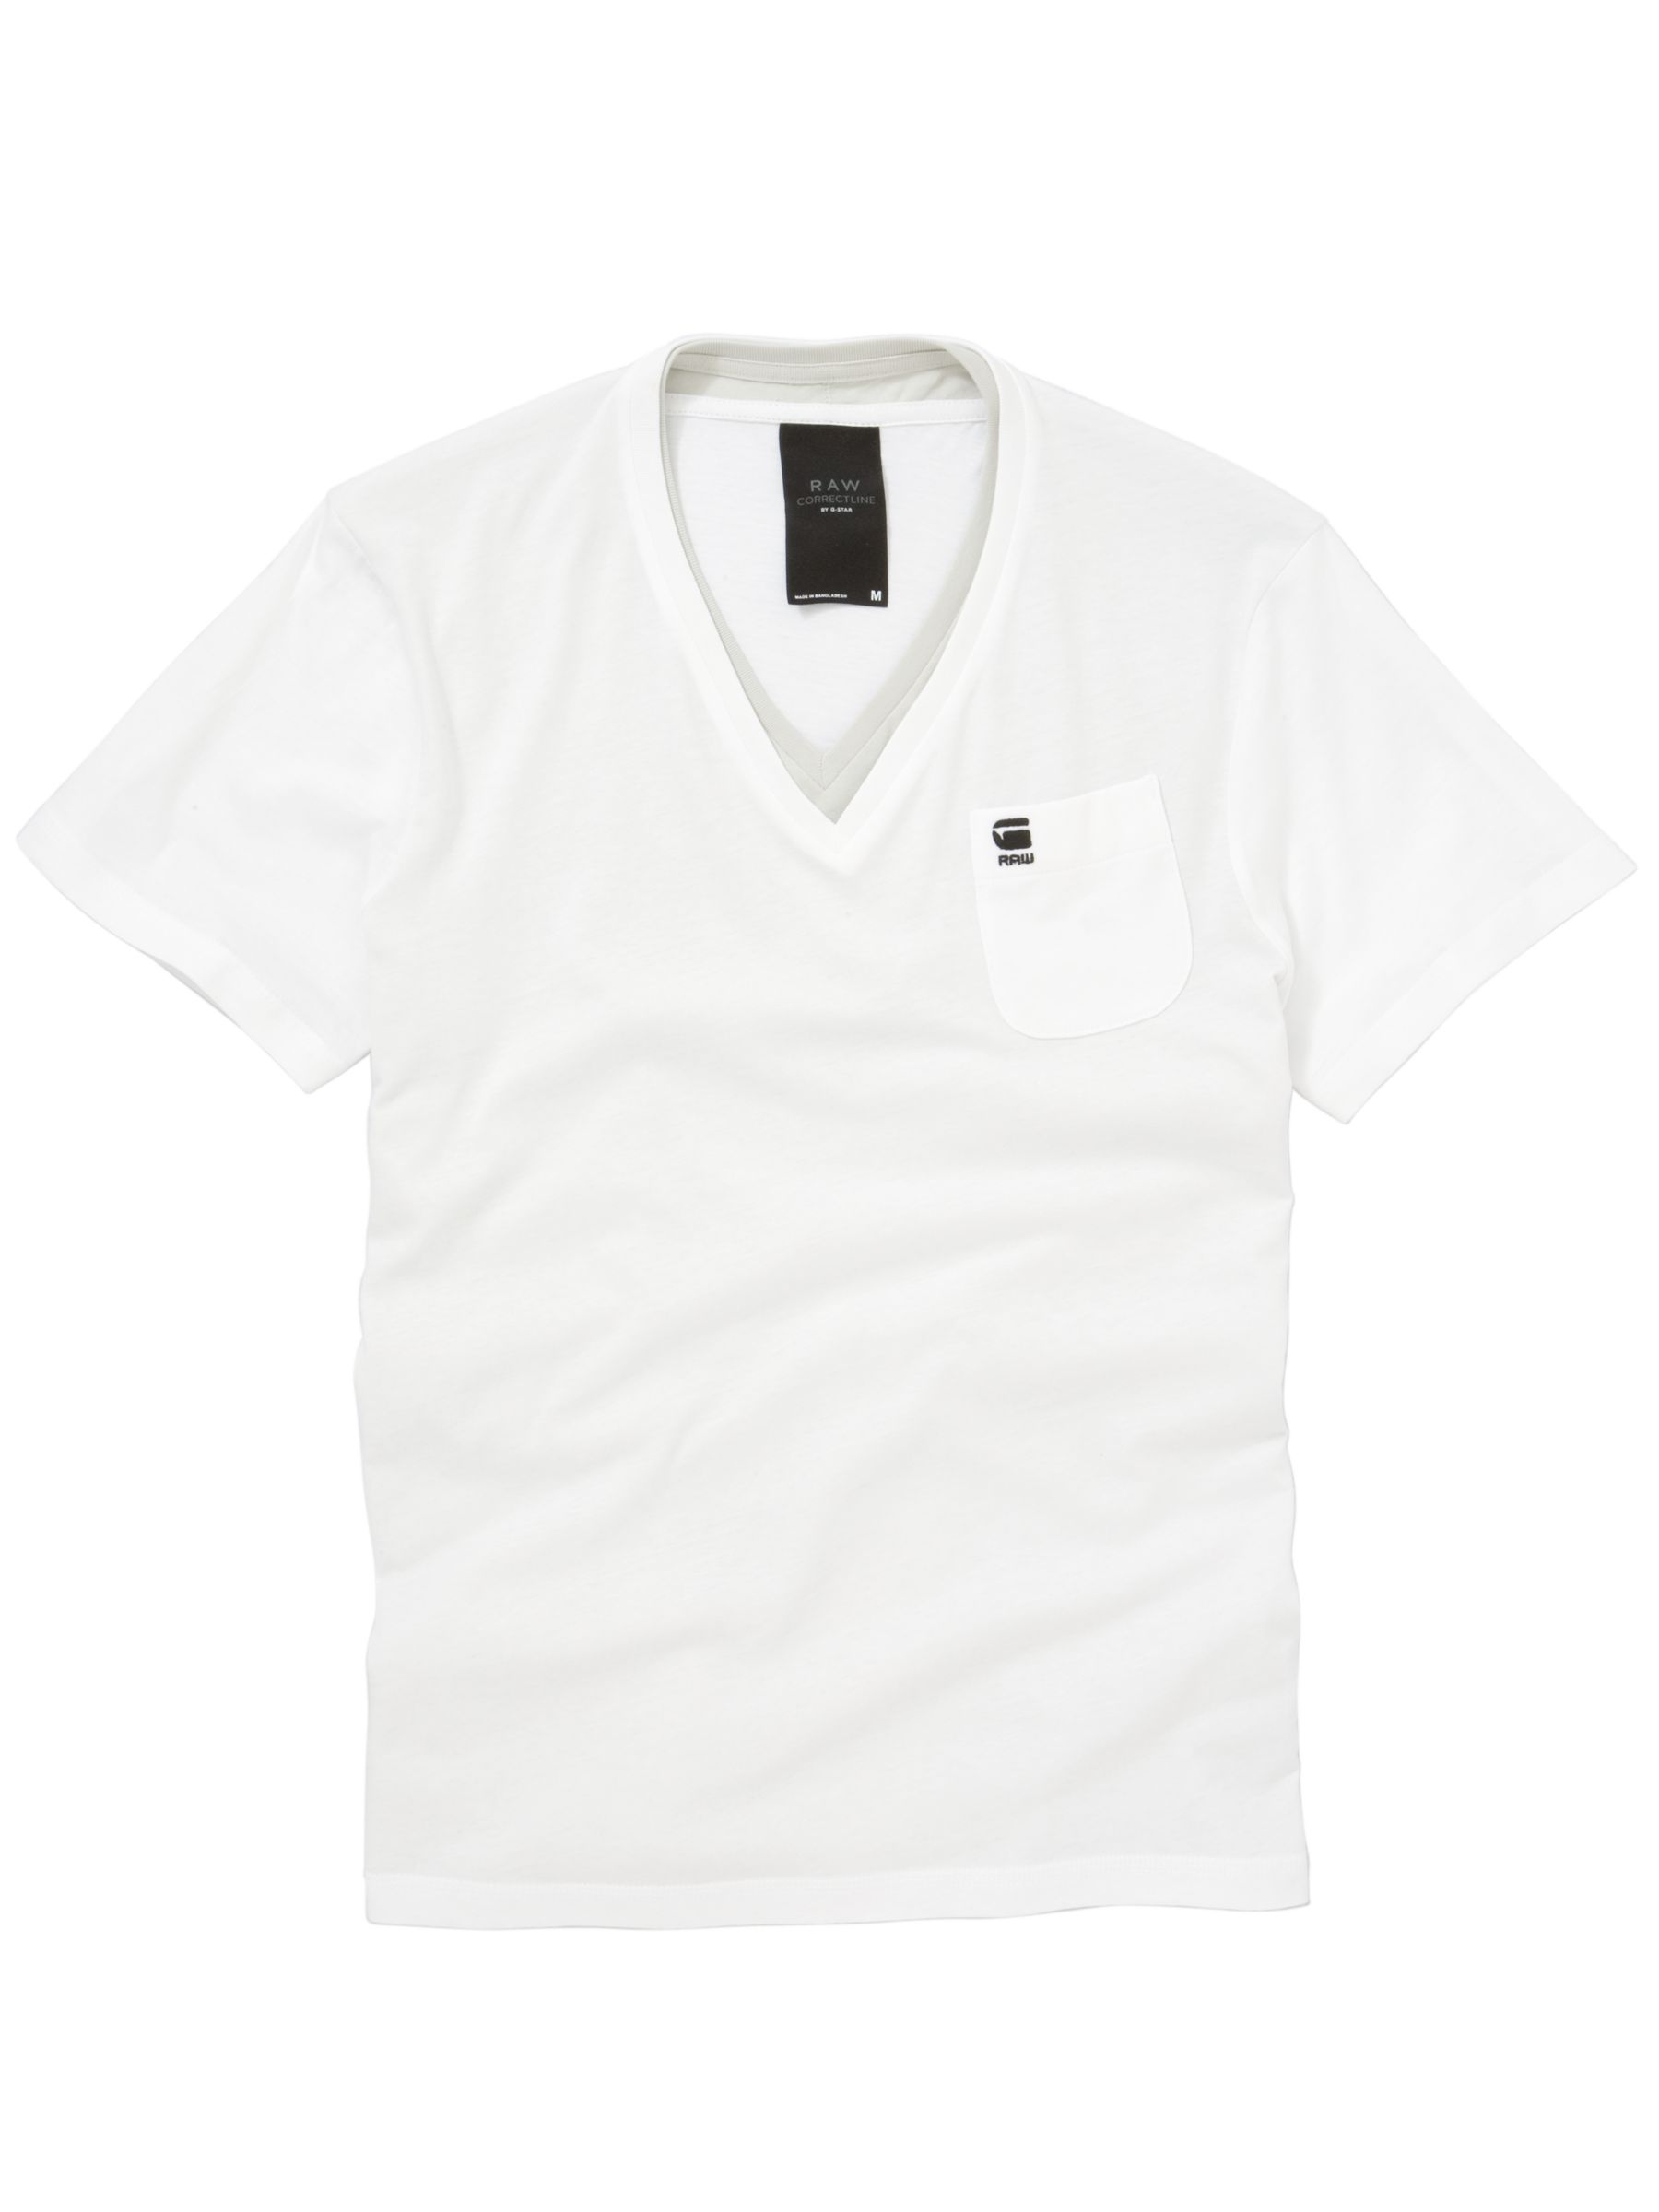 G-Star Raw Victor Short Sleeve T-Shirt, White